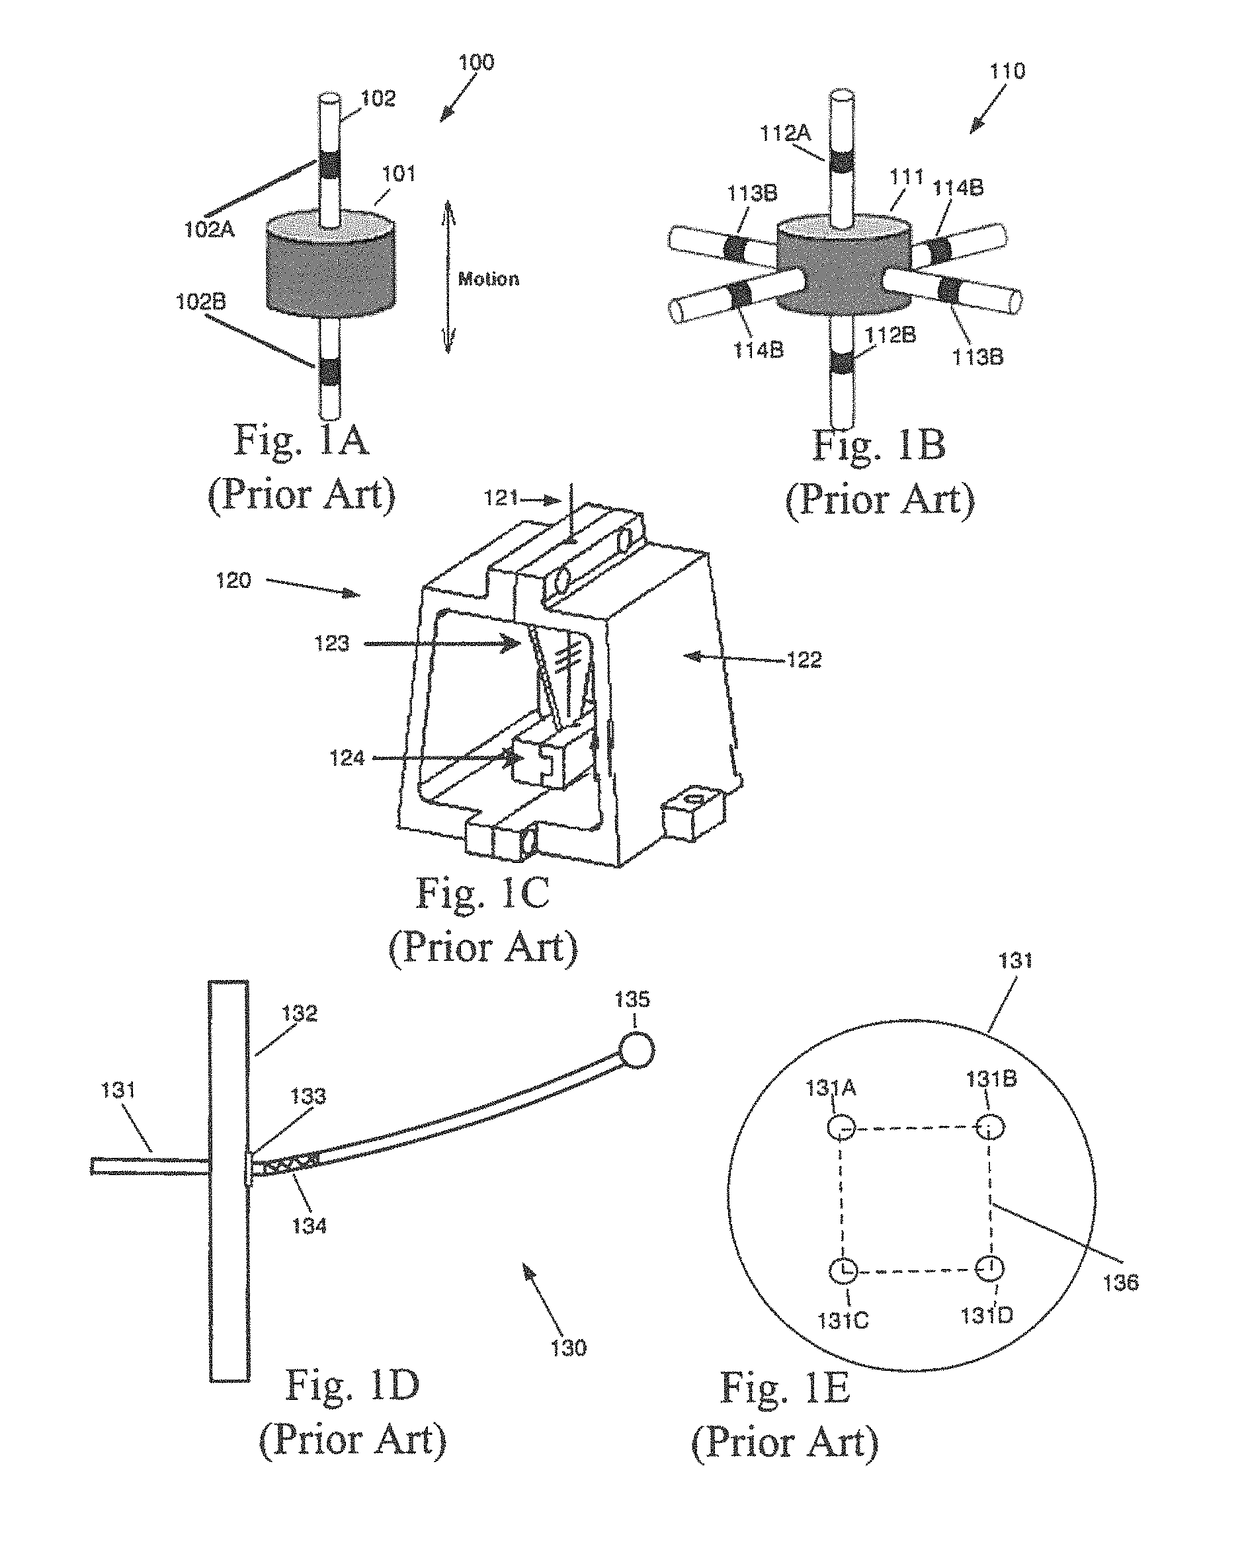 Integrated fiber bragg grating accelerometer in a surgical instrument